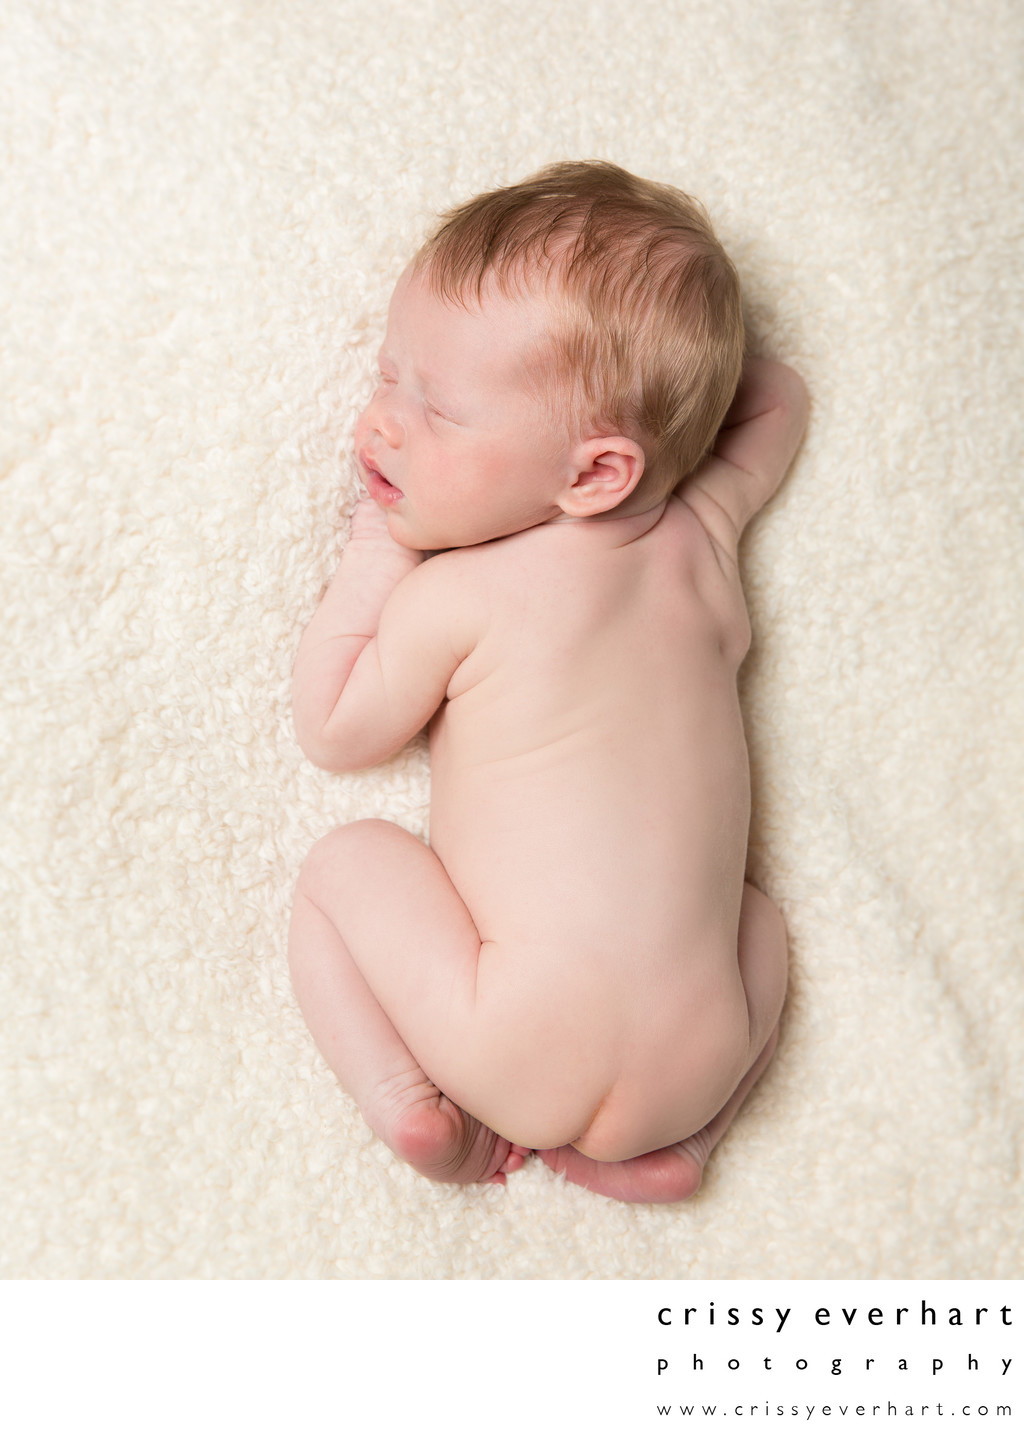 Naked Sleeping Baby - Newborn Studio Pictures